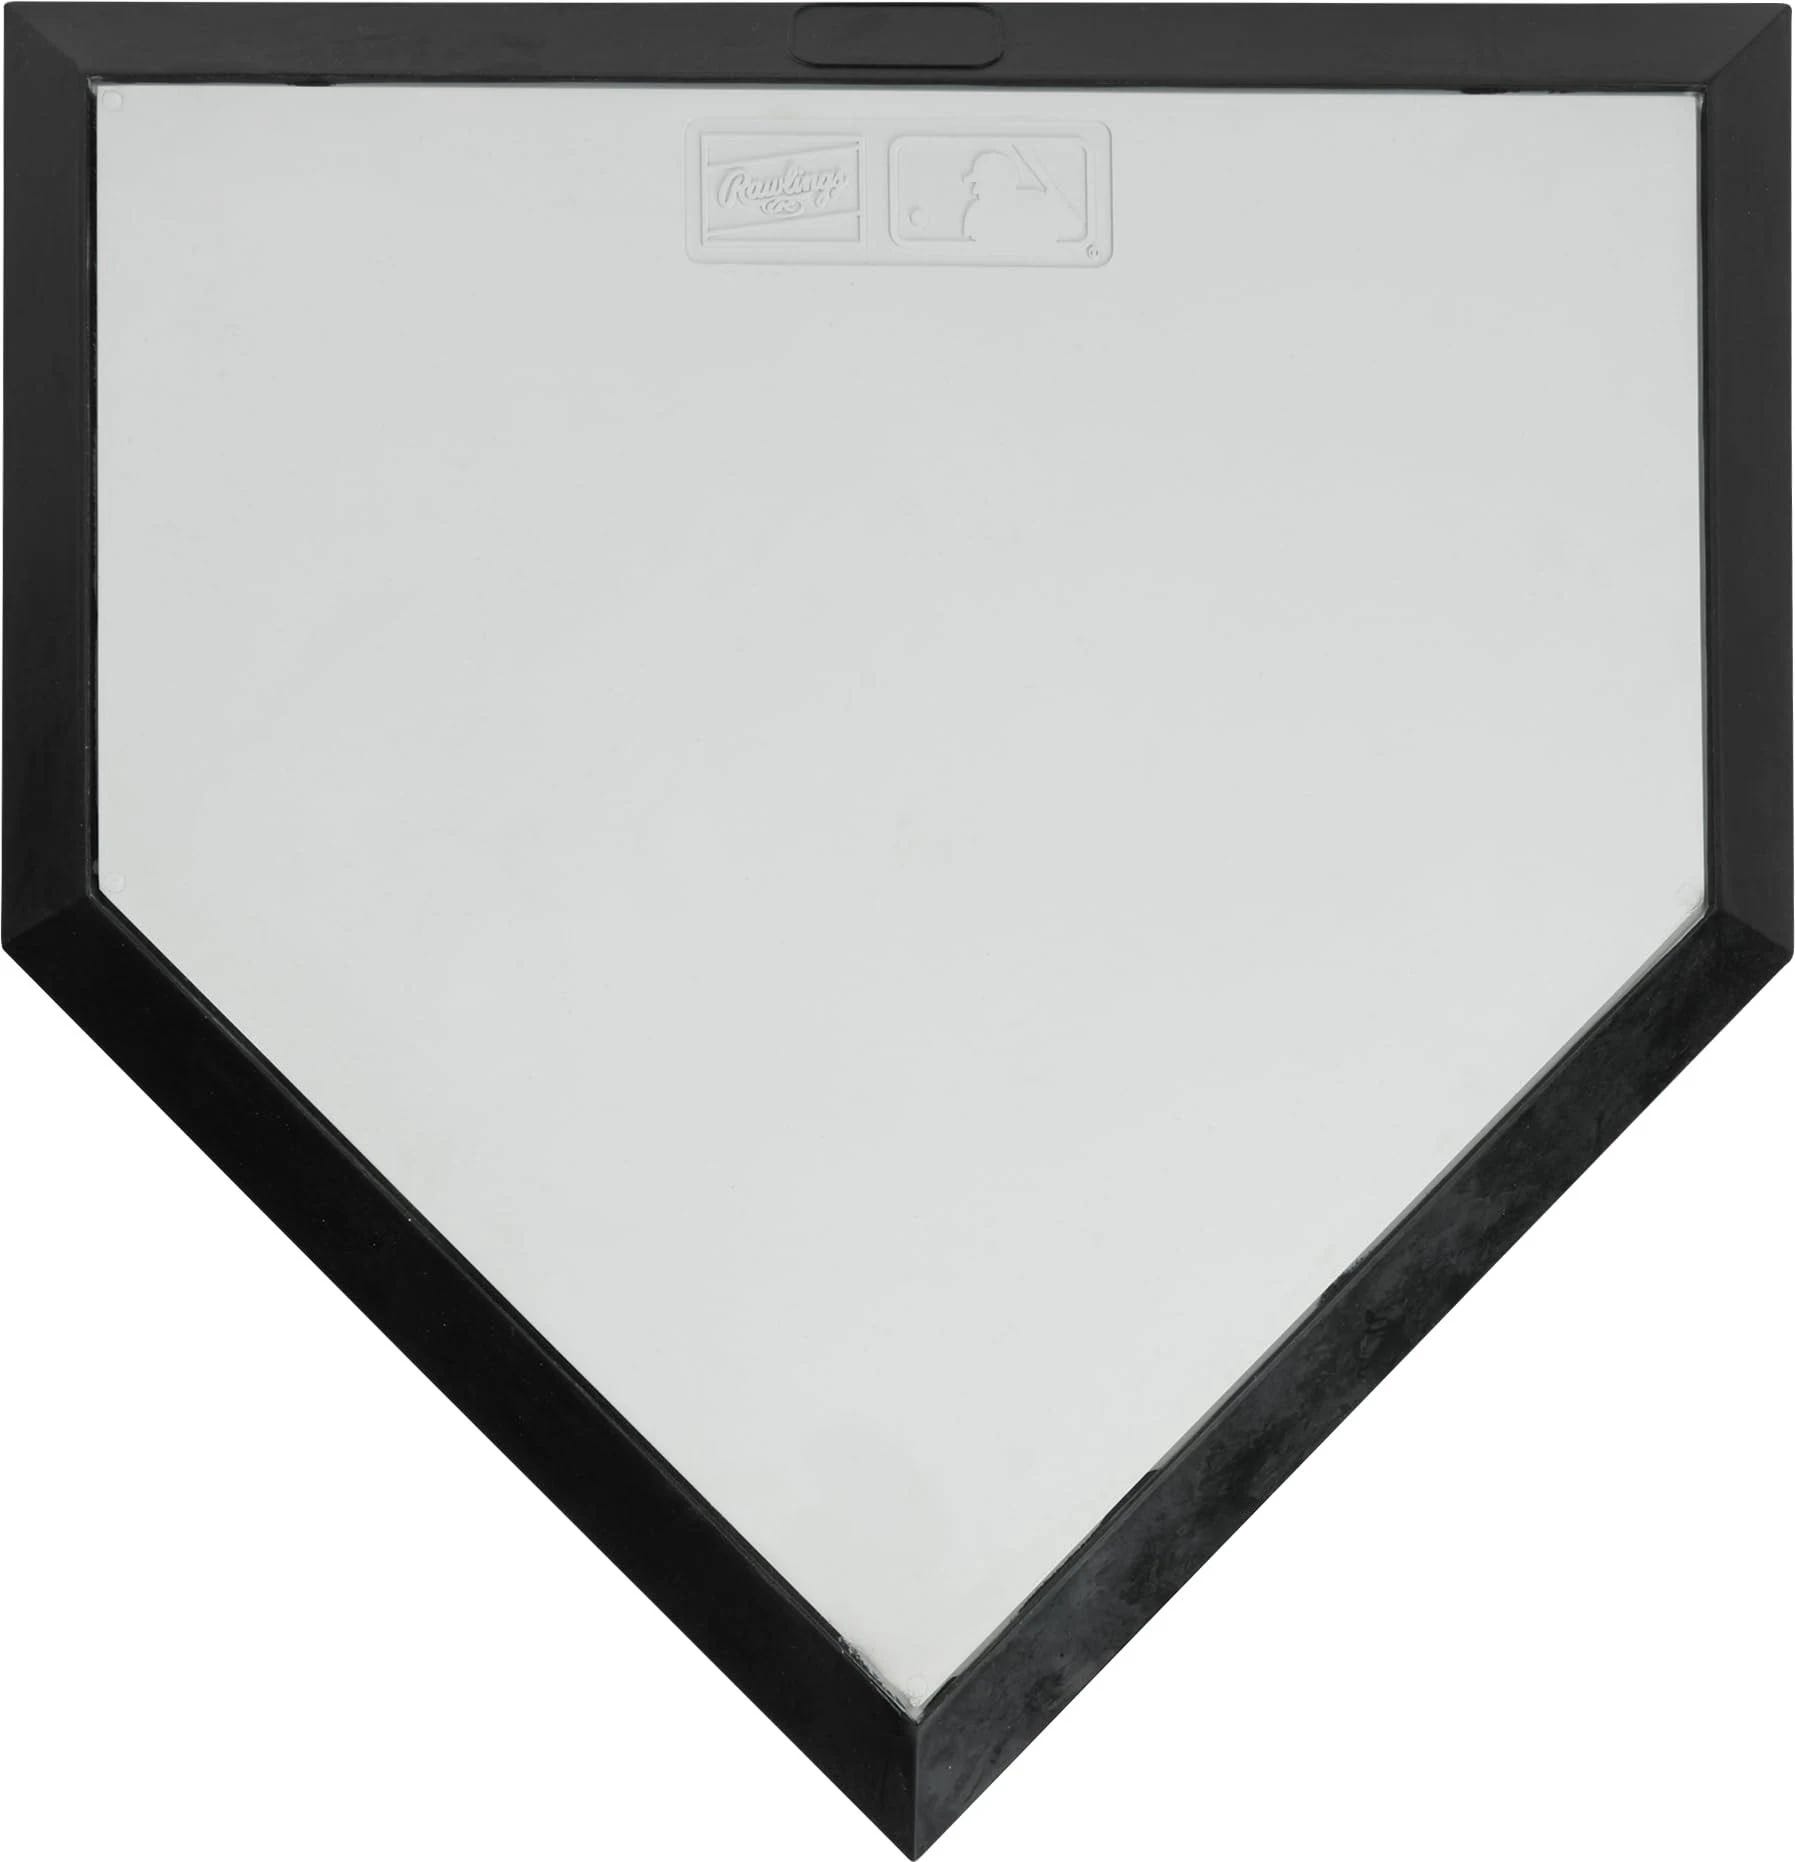 Rawlings Hollywood Turf Home Baseball Plate | Image